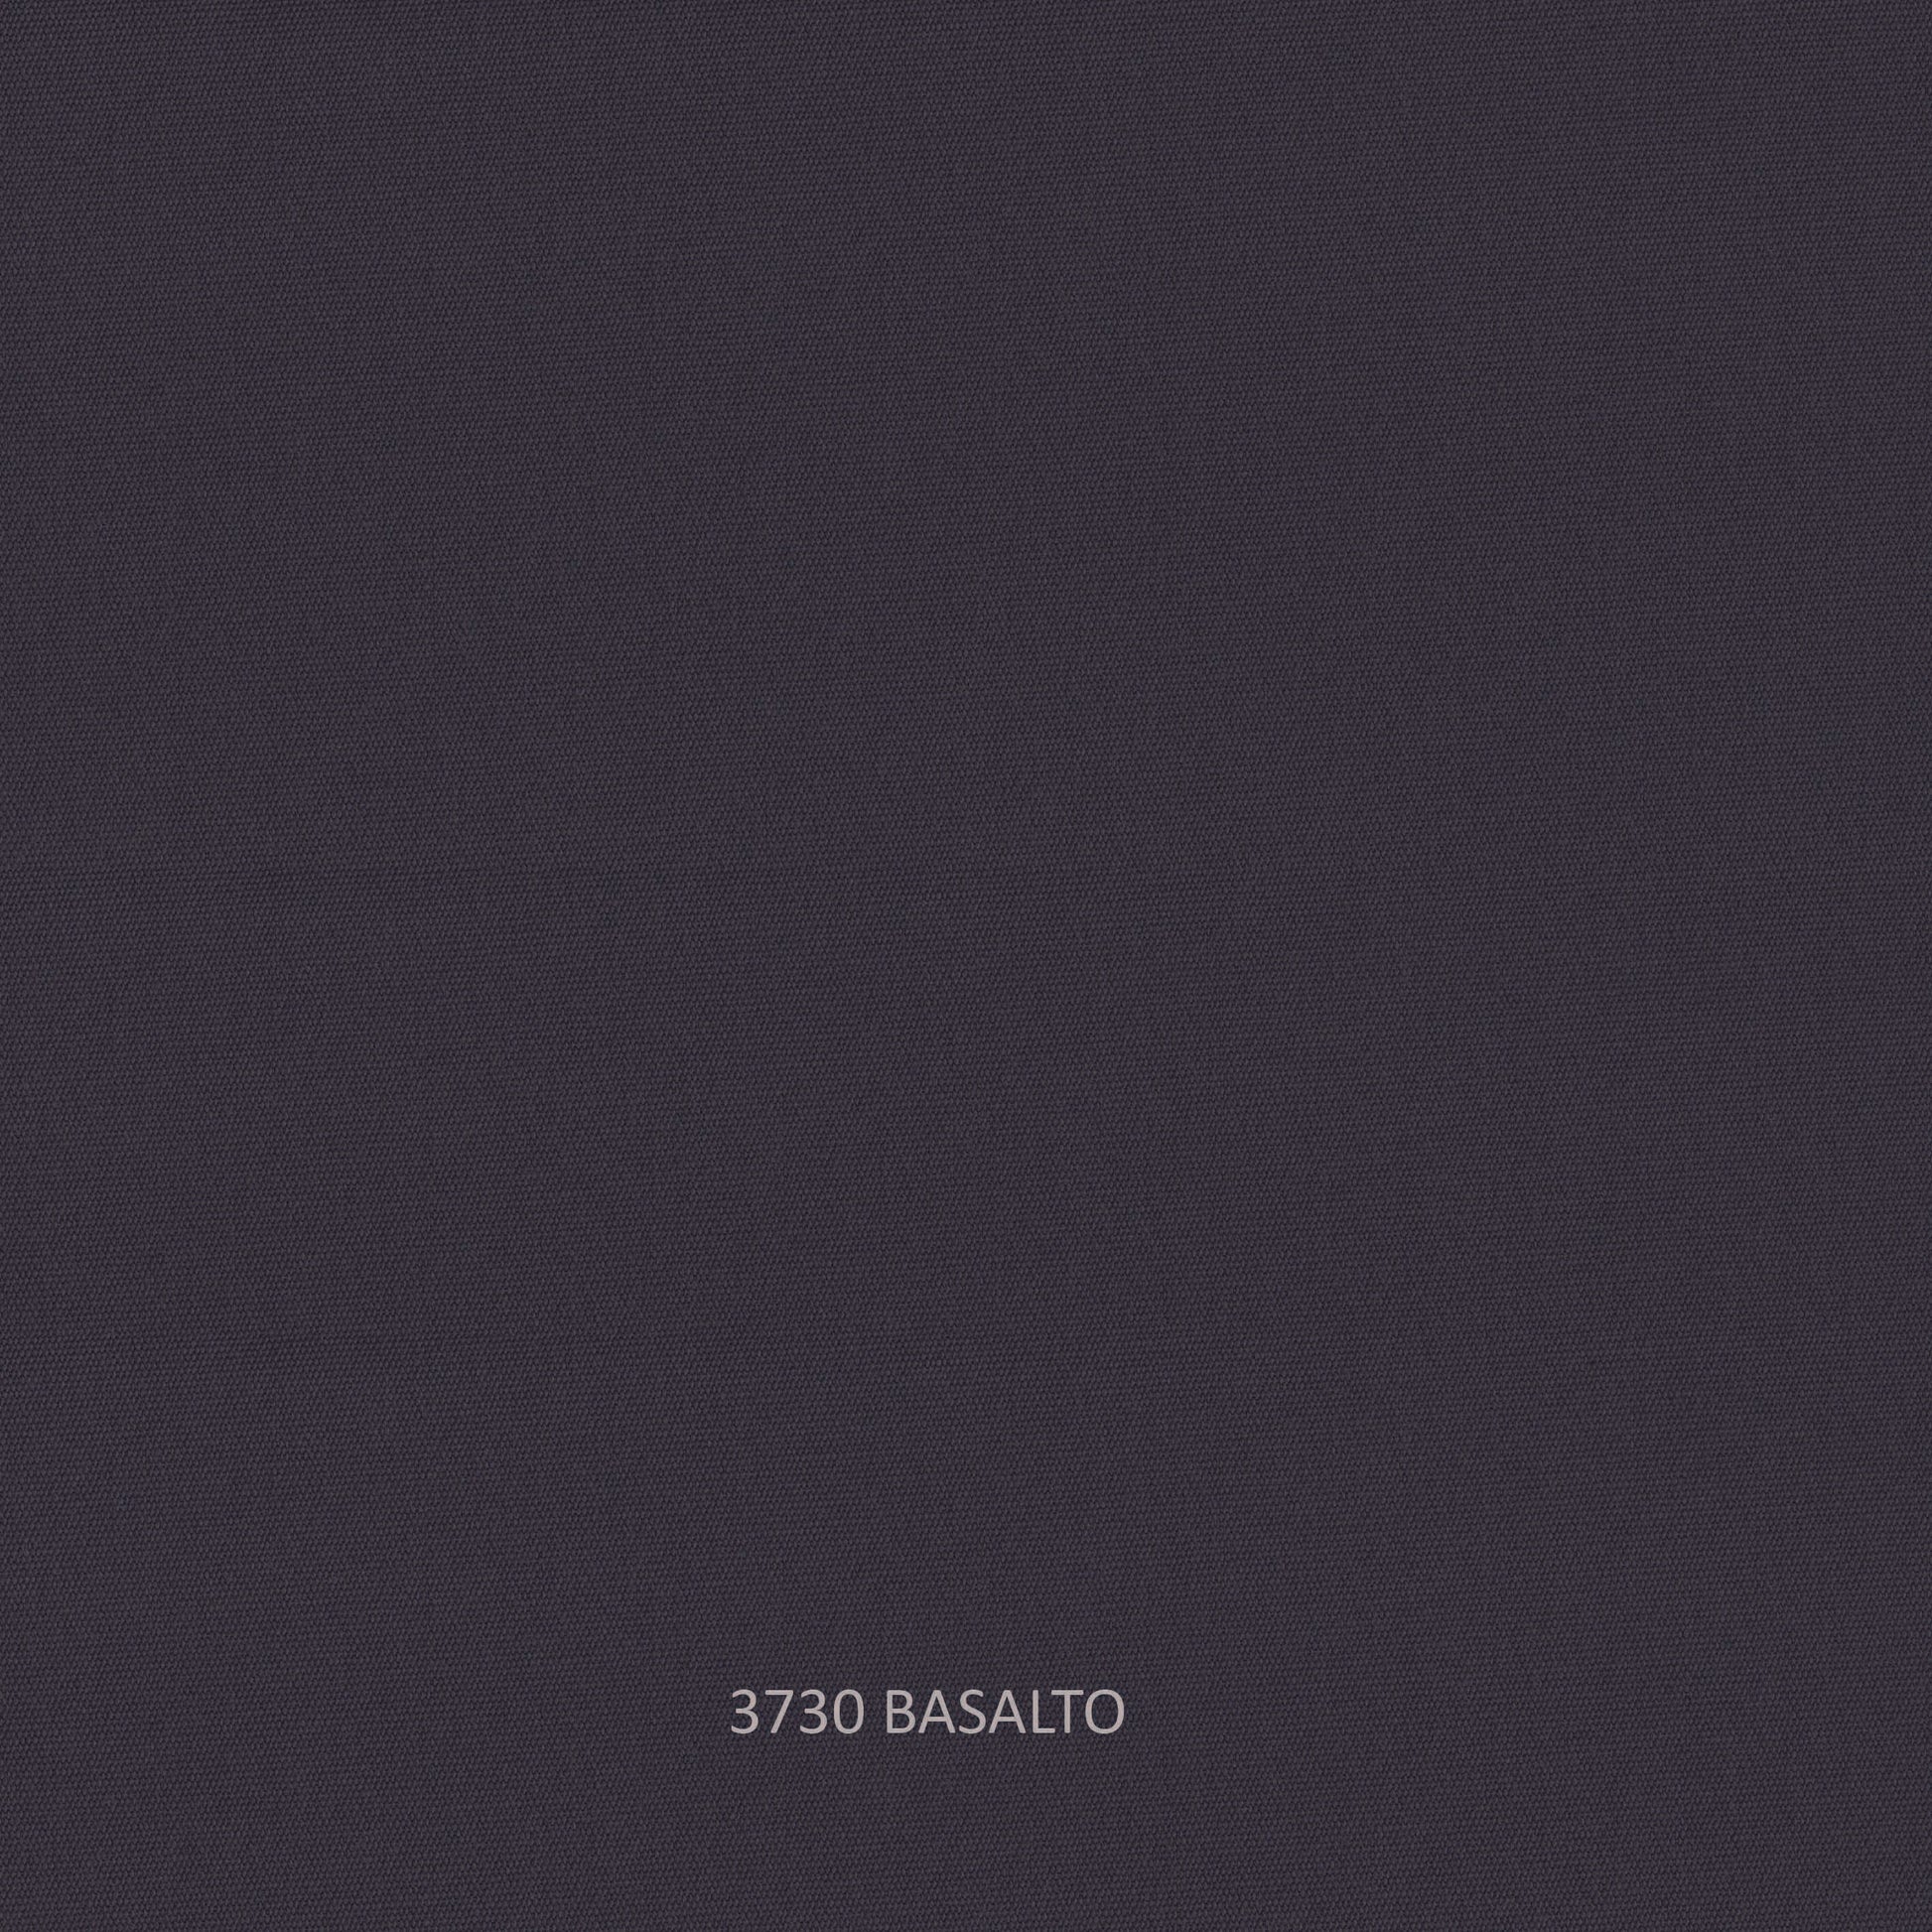 Brando Silver Walnut Love Seat - PadioLiving - Brando Silver Walnut Love Seat - Outdoor Love Seat - Silver Walnut 10mm Weave - Basalto (£2225) - PadioLiving